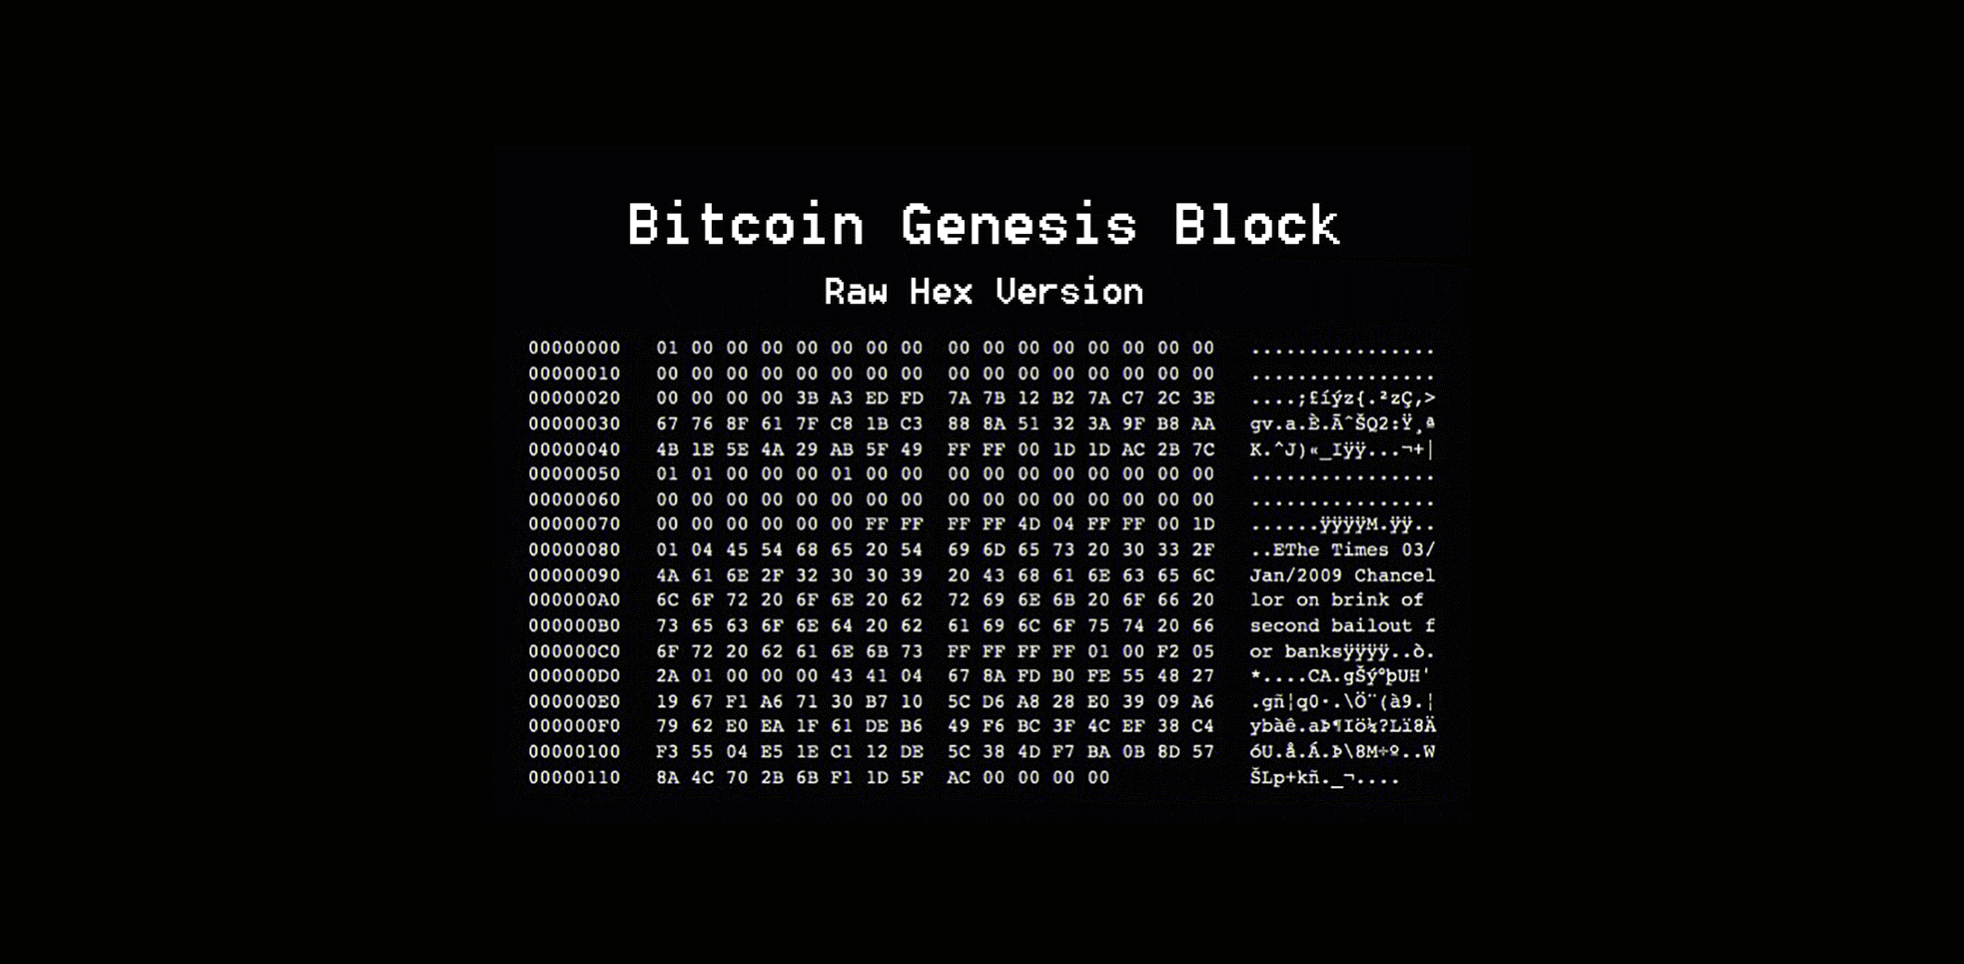 Genesis block raw hash